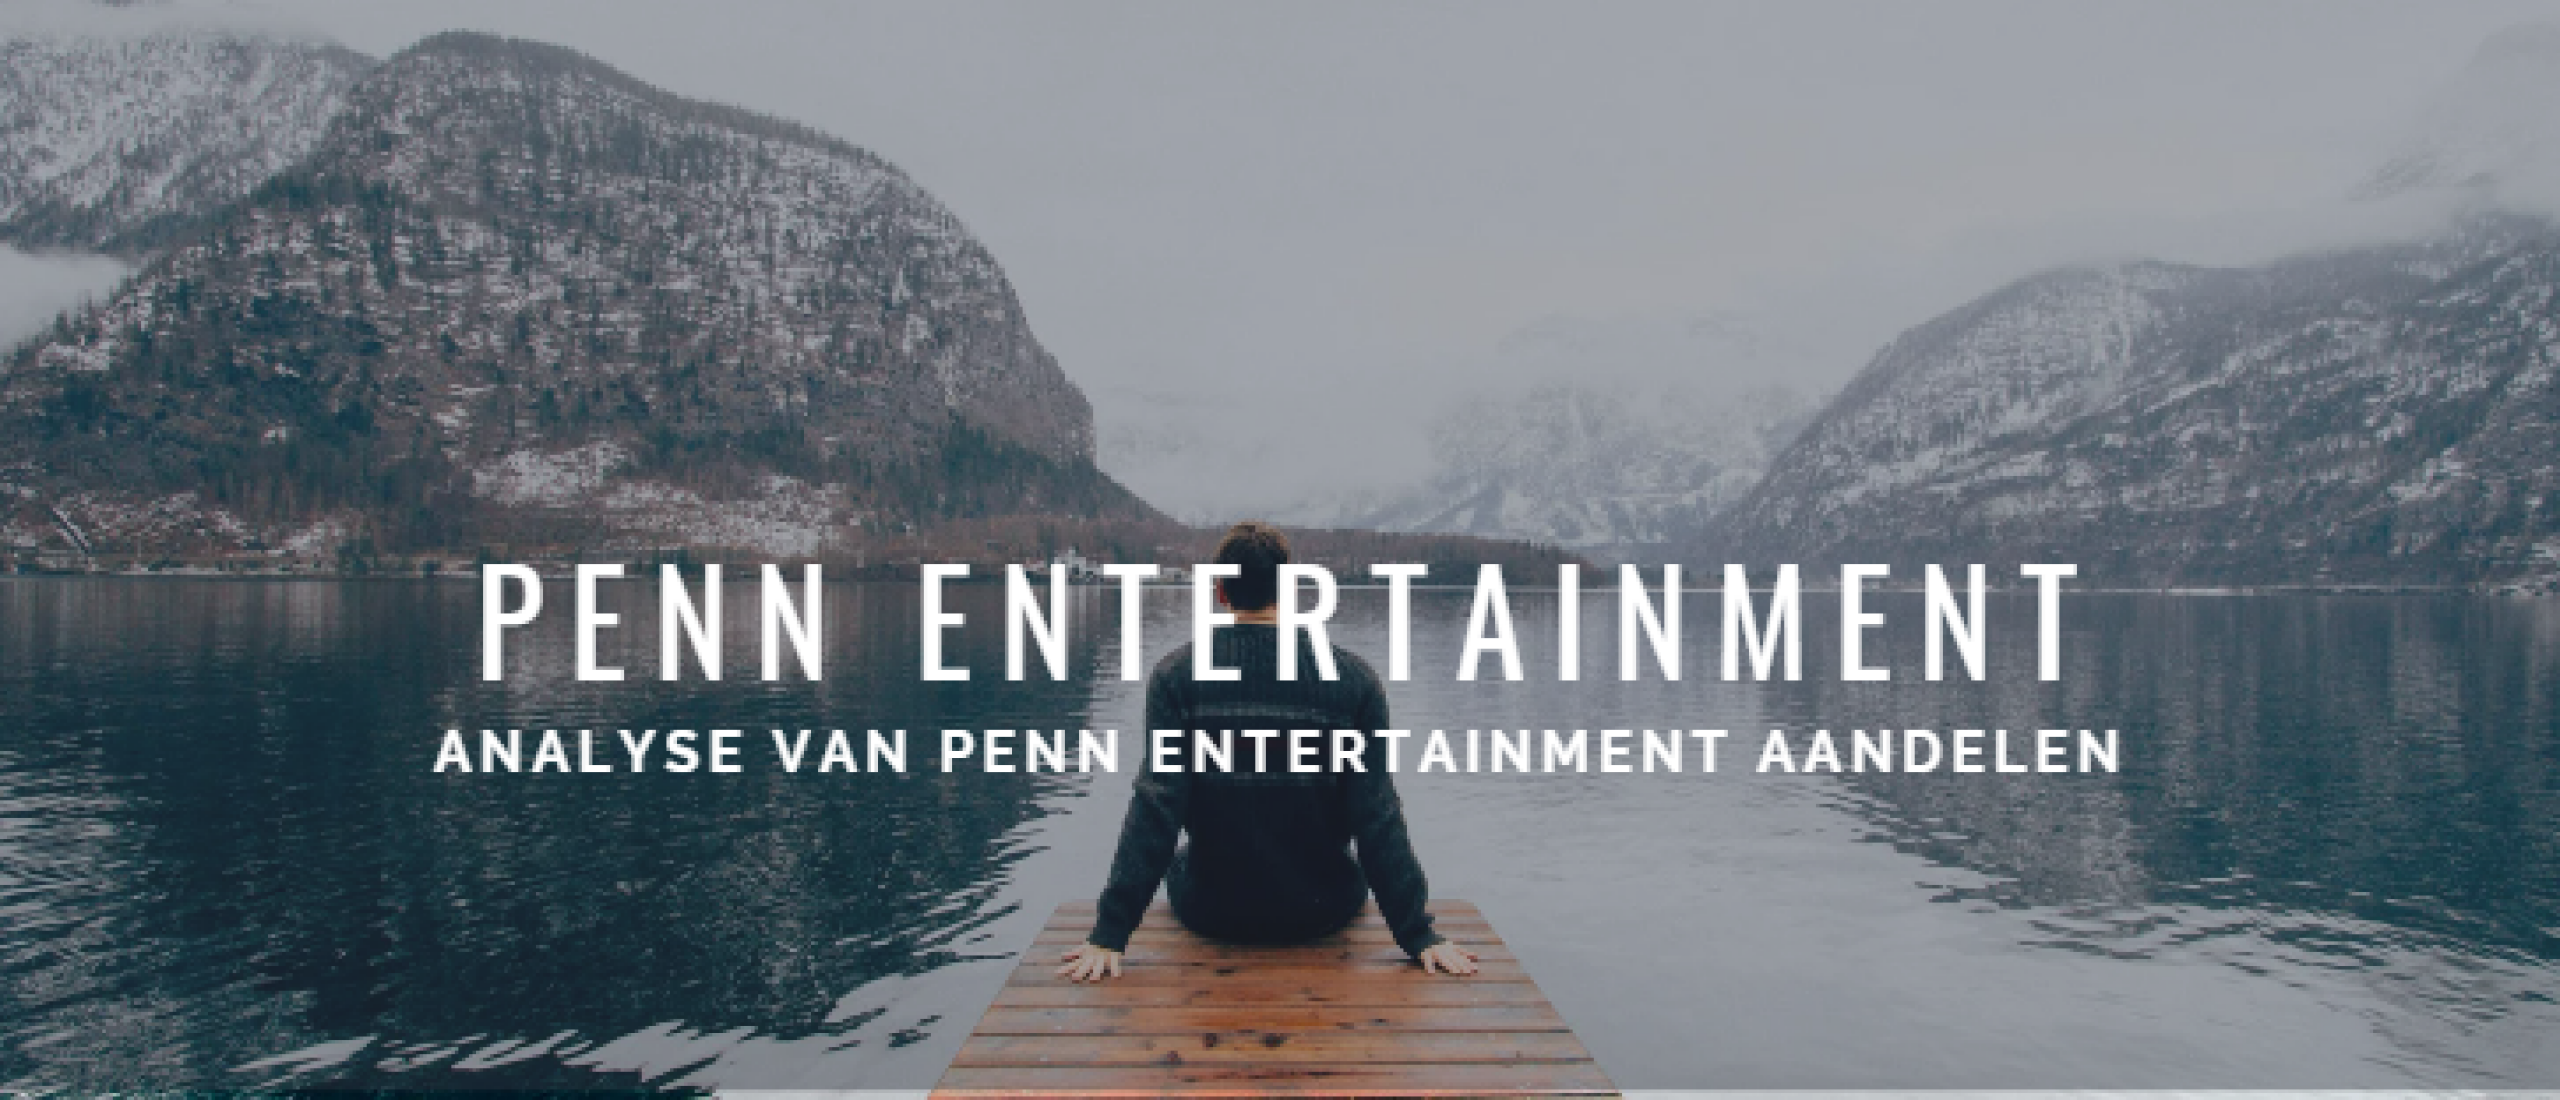 PENN Entertainment Aandelen kopen? Analyse +45% Groei | Happy Investors